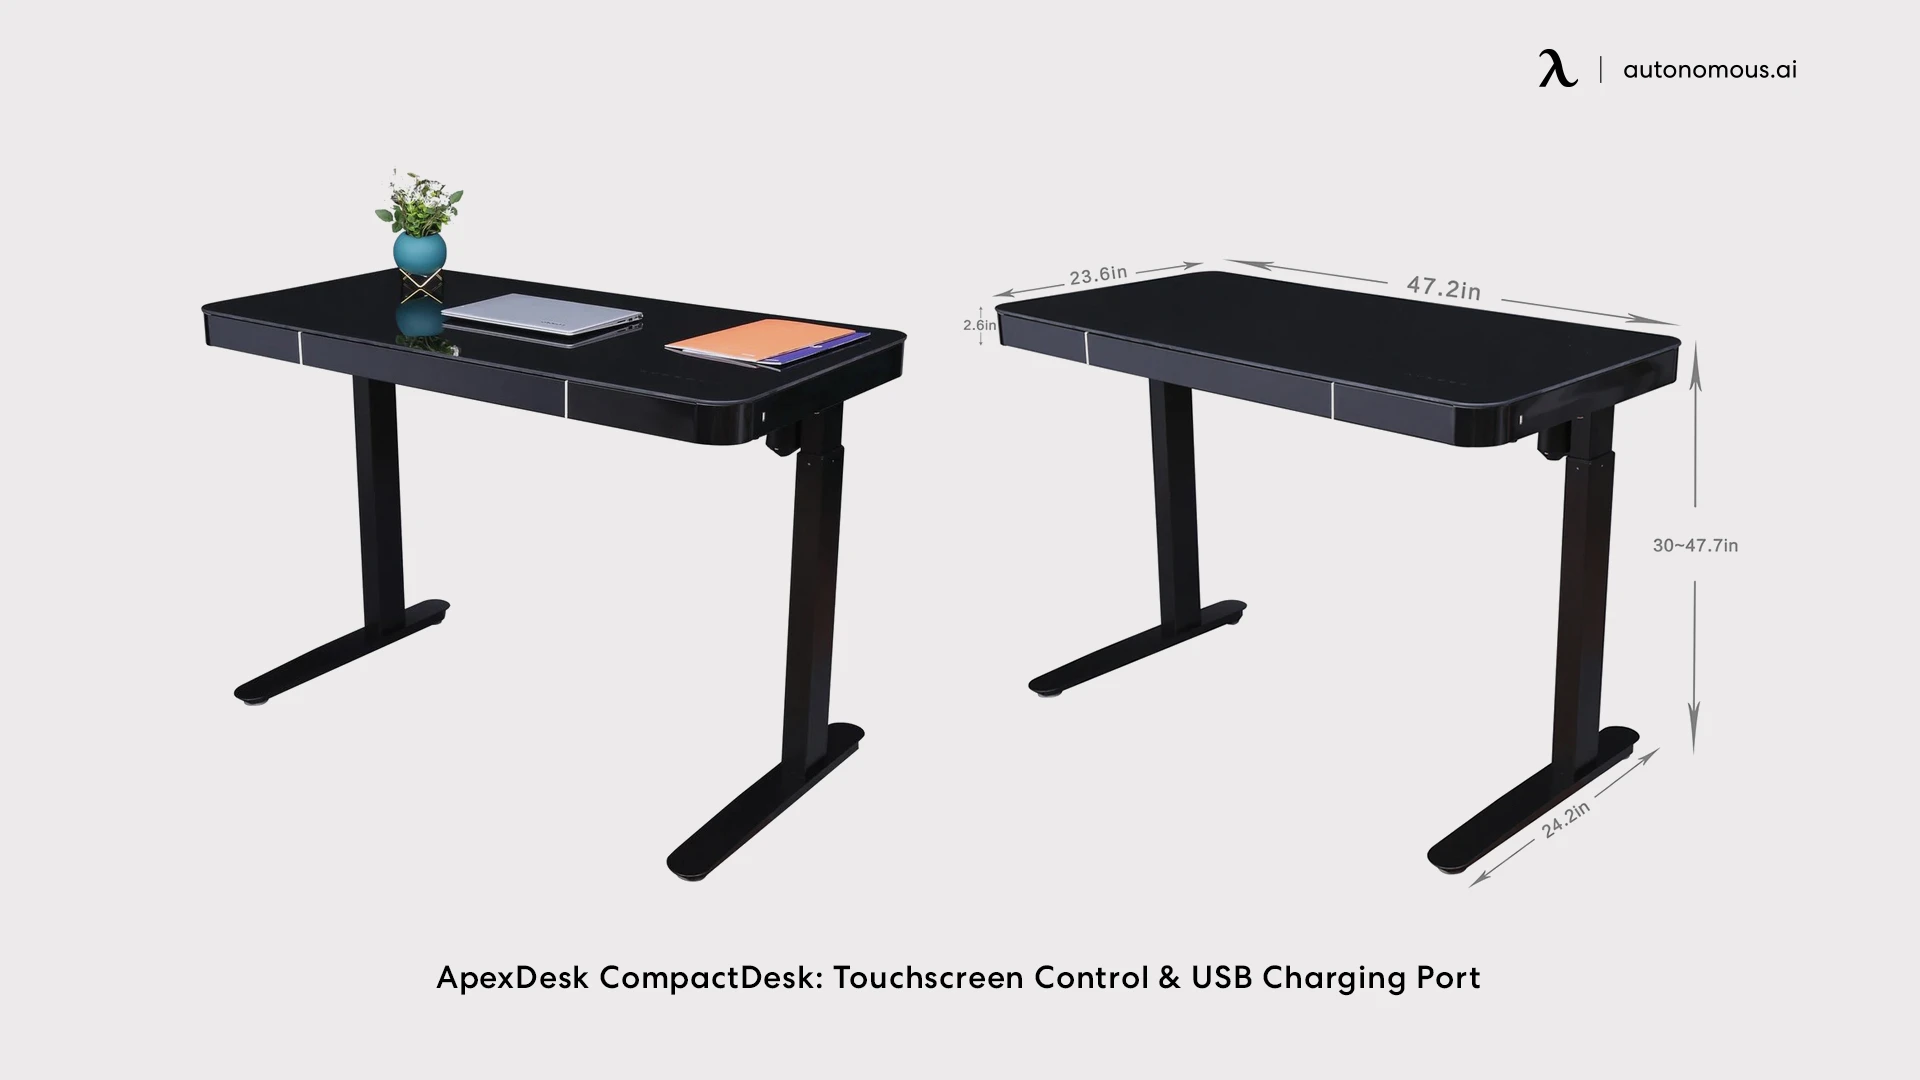 ApexDesk CompactDesk: Touchscreen Control & USB Charging Port